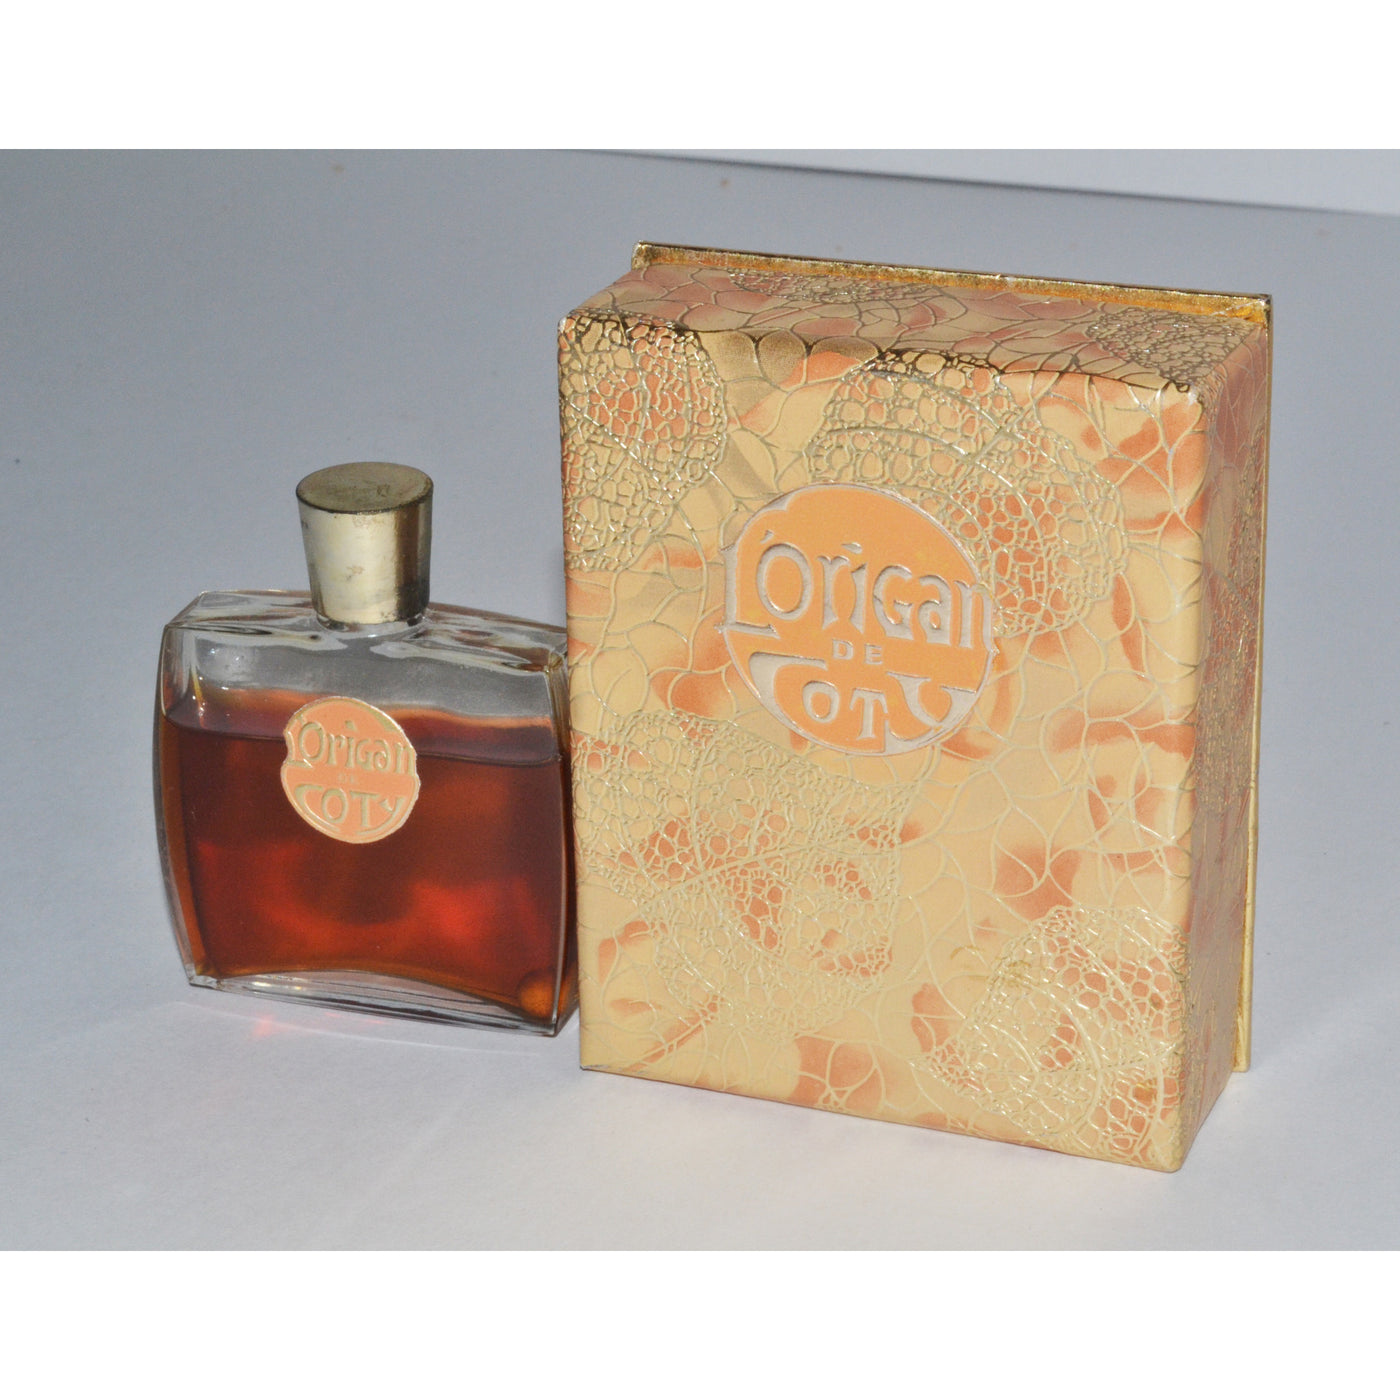 Vintage L'Origan Parfum By Coty